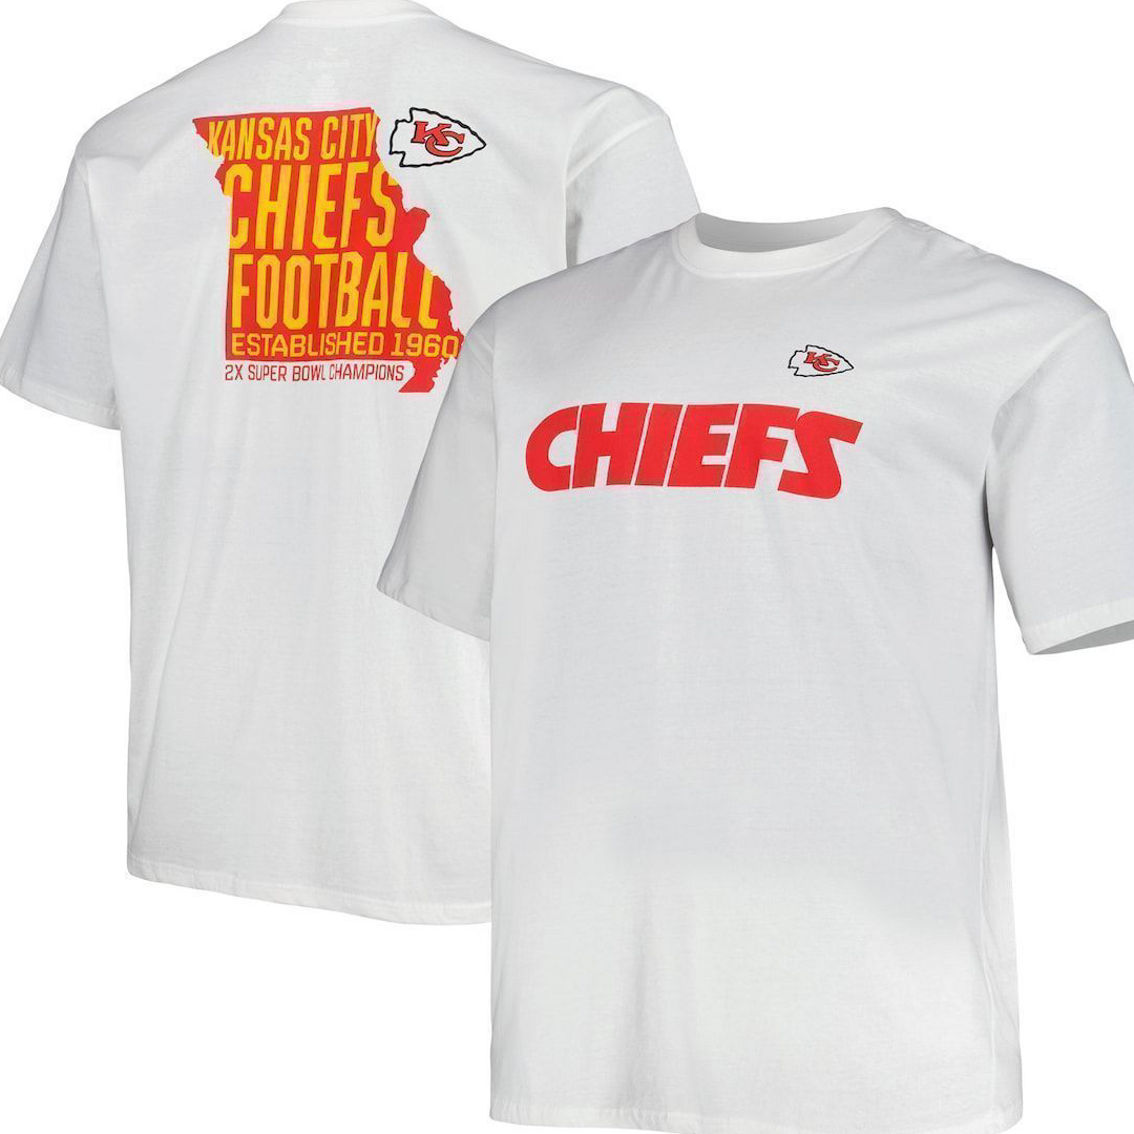 Fanatics Branded Men's White Kansas City Chiefs Big & Tall Hometown Collection Hot Shot T-Shirt - Image 2 of 4